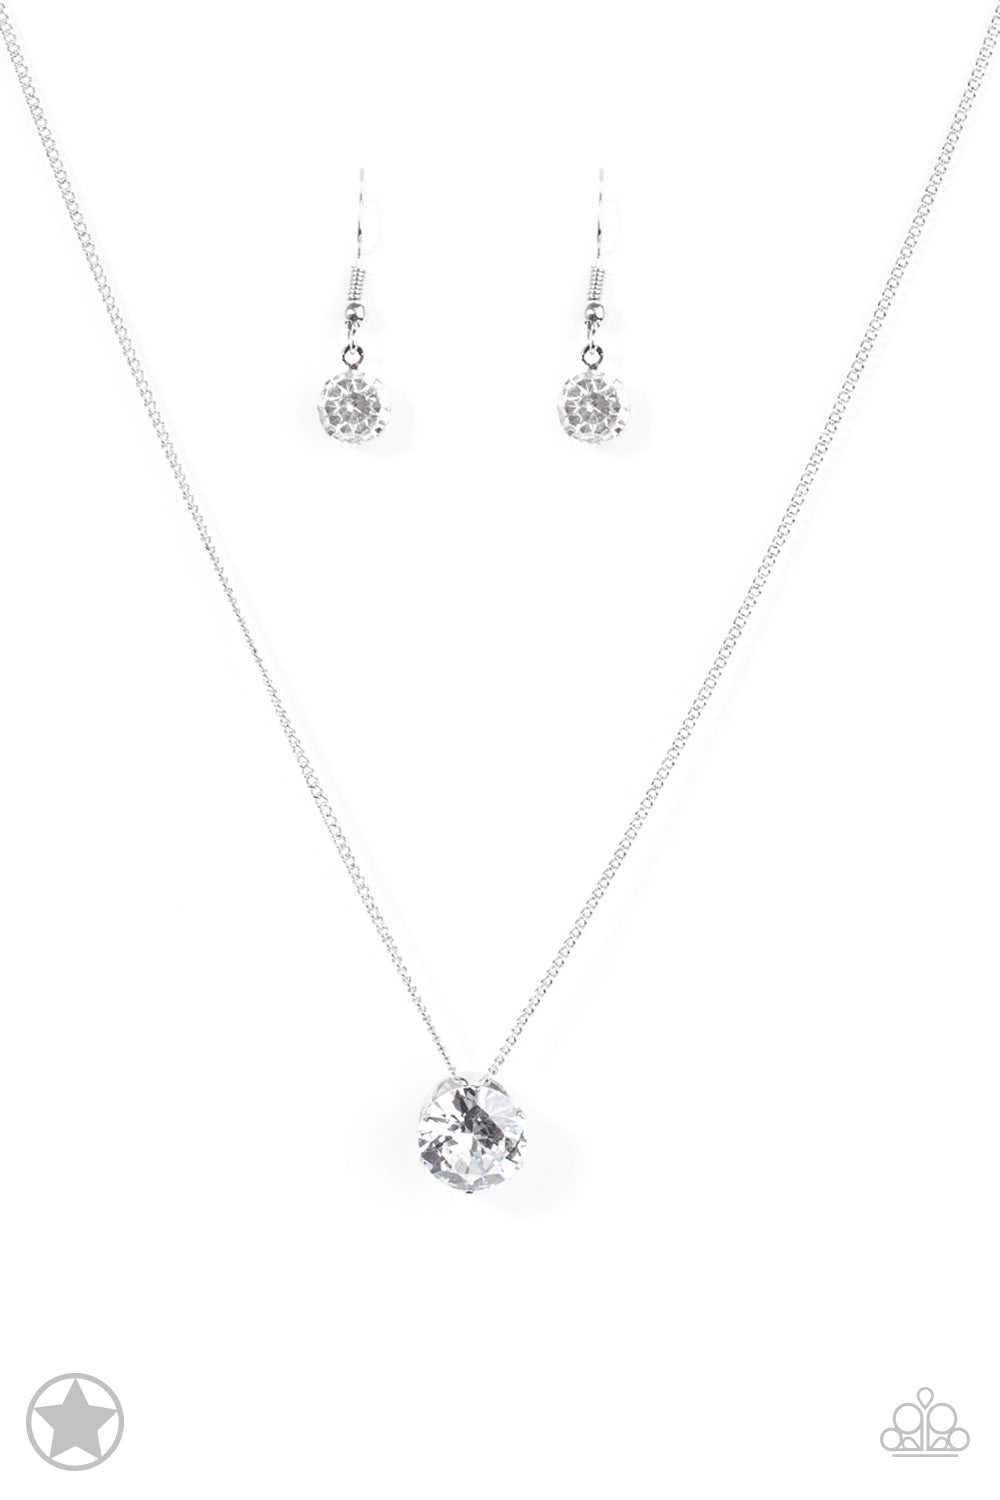 Paparazzi What A Gem White Short Necklace rhinestone pendant silver chain